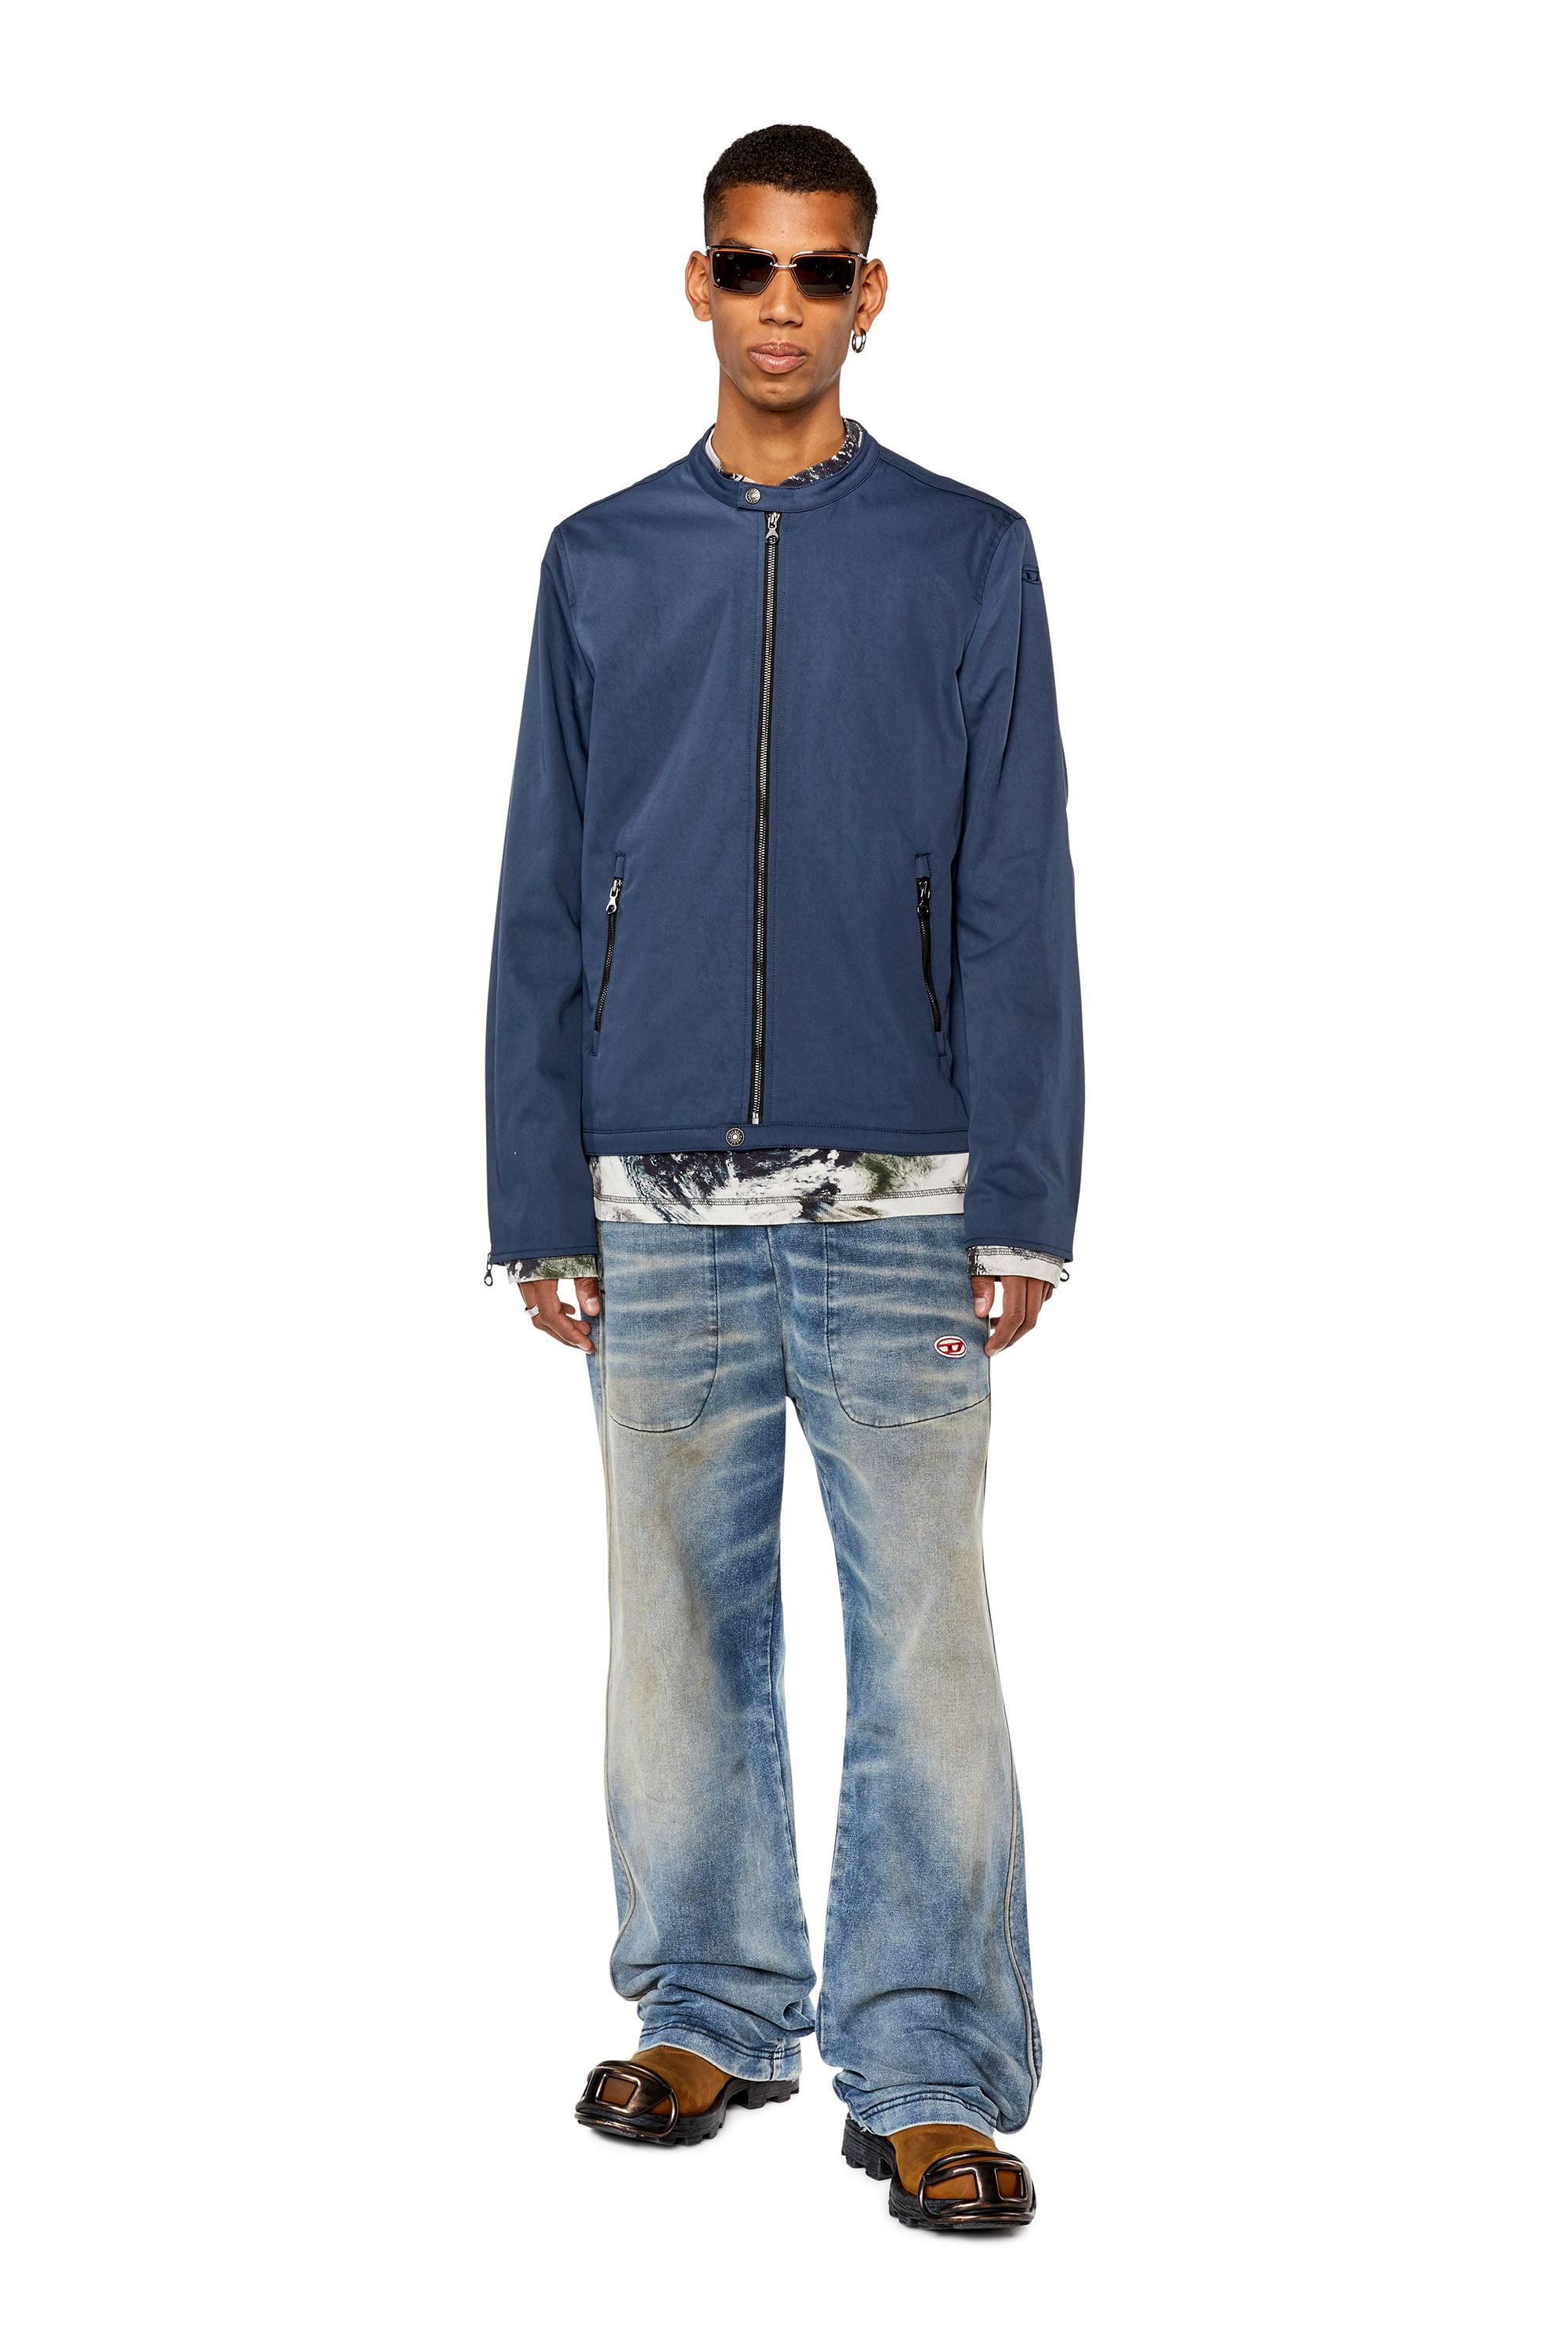 Diesel - J-GLORY-NW, Man Biker jacket in cotton-touch nylon in Blue - Image 2